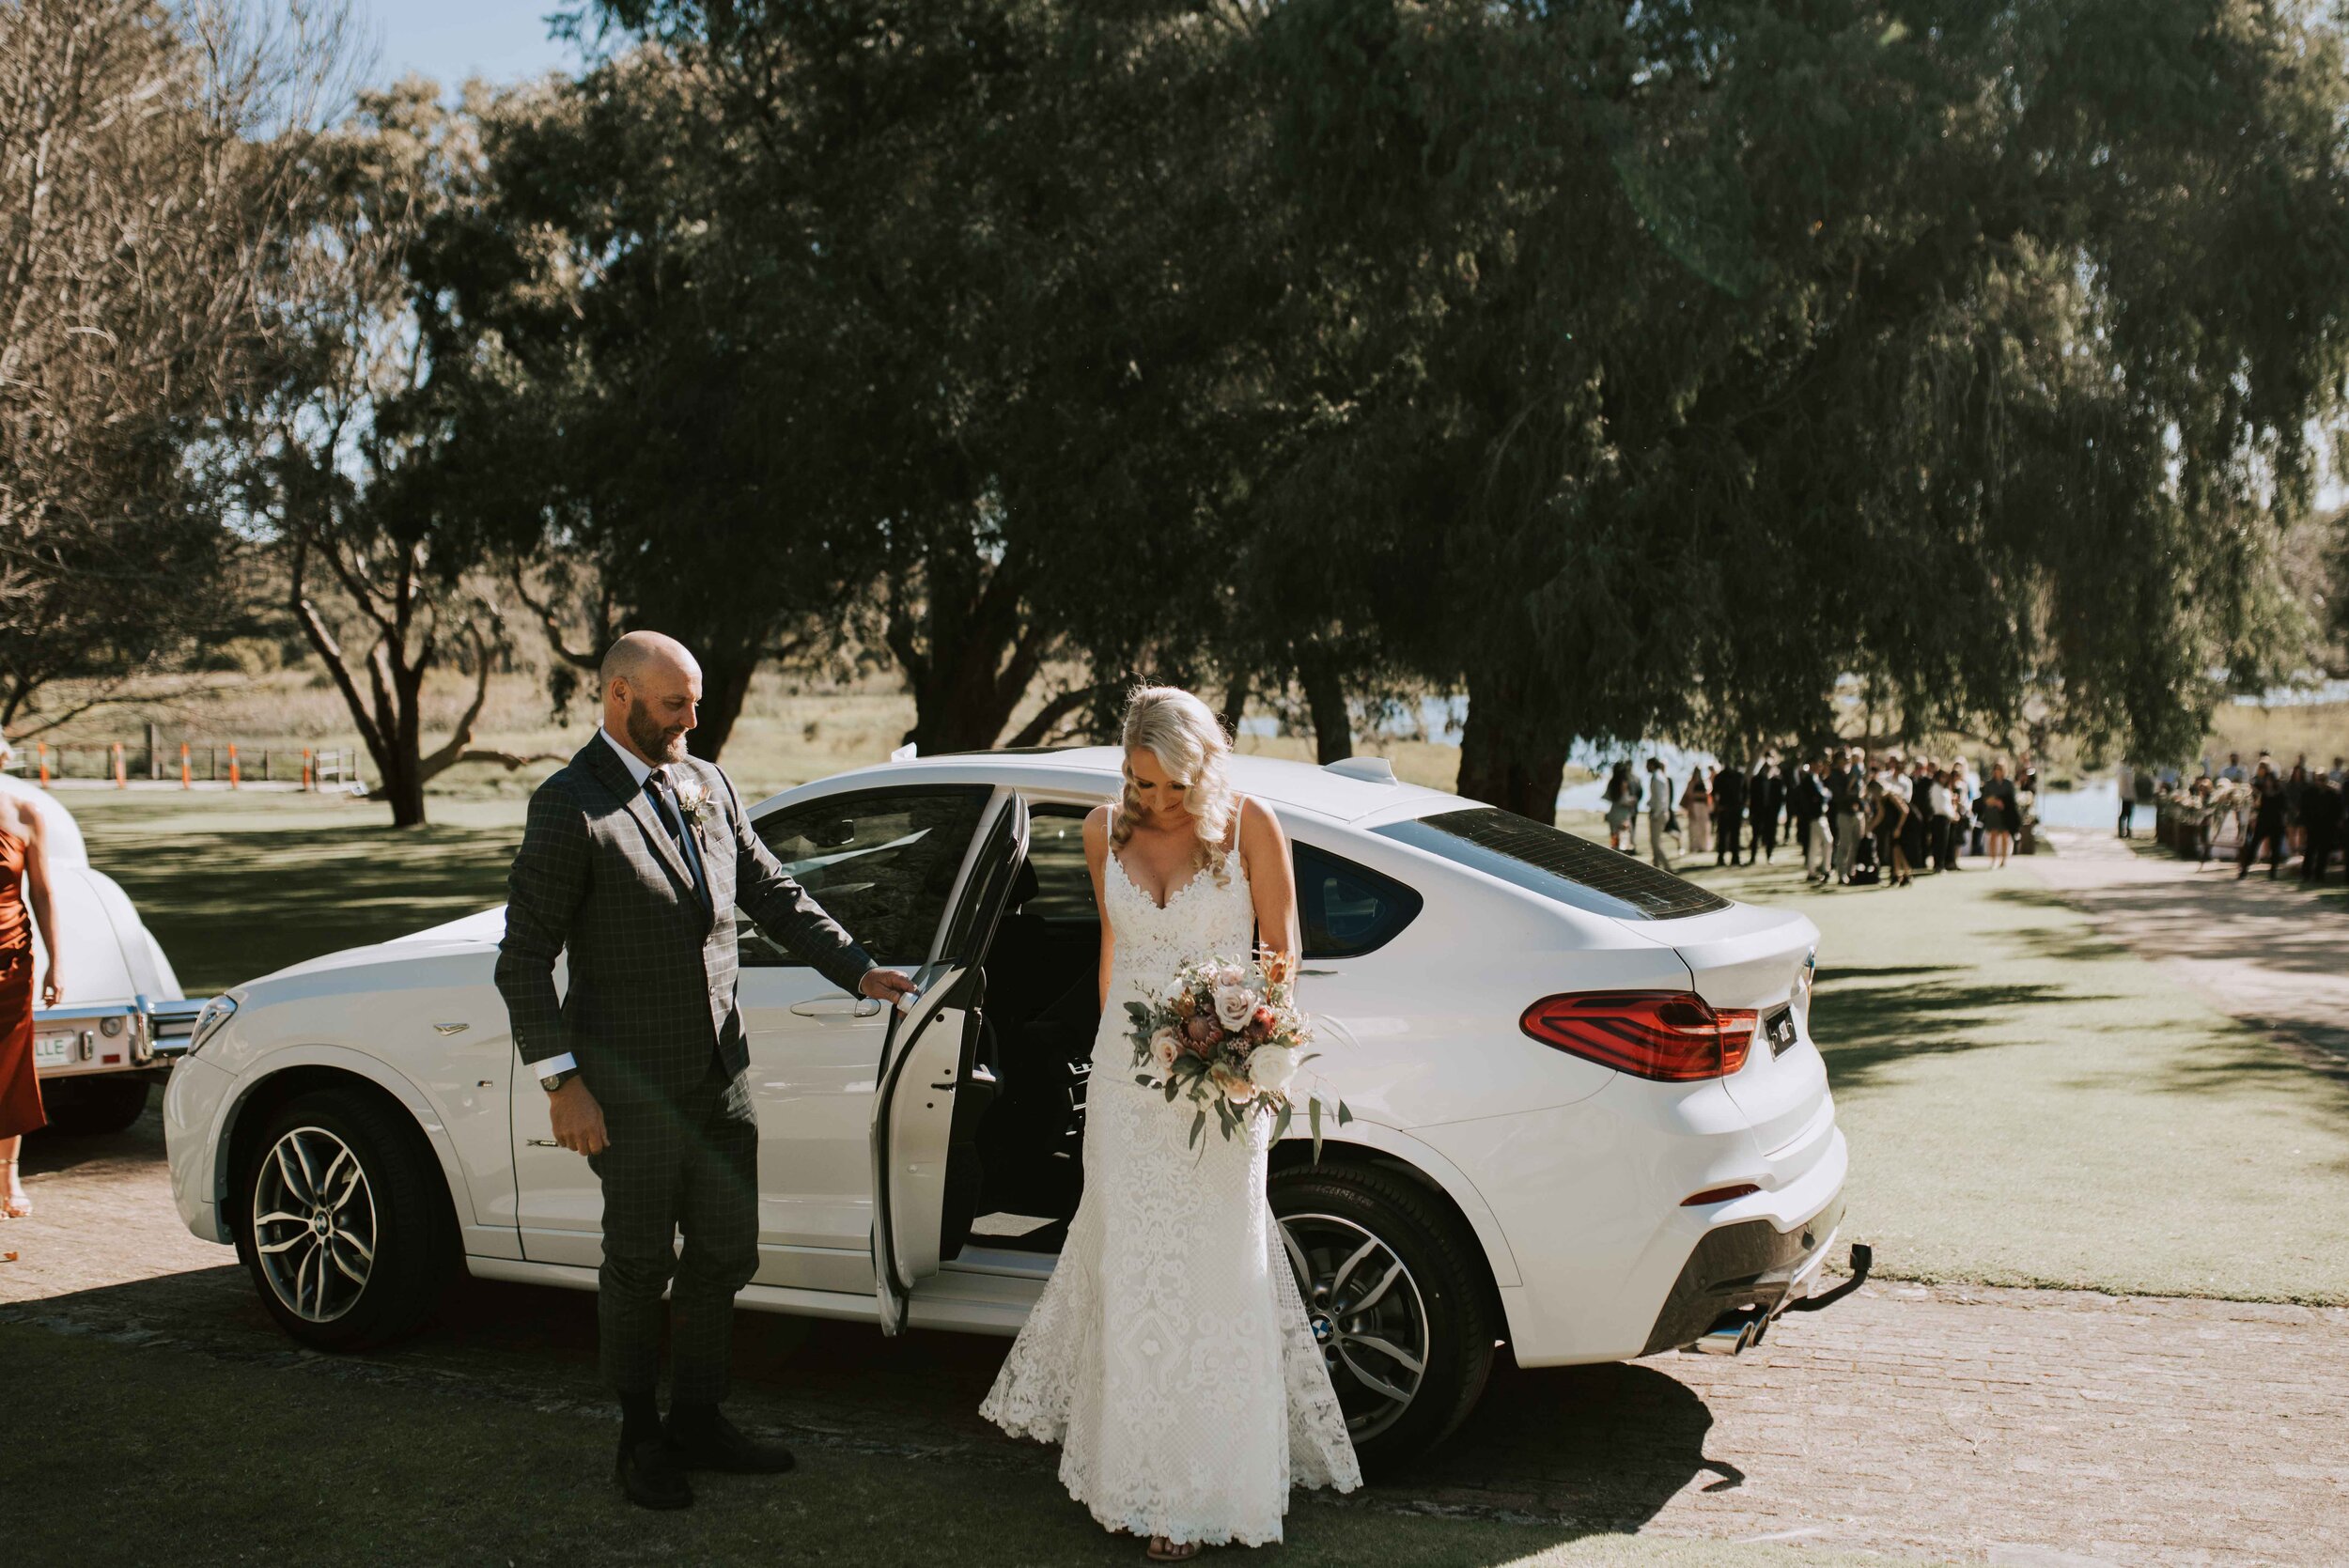 Yanchep park beautiful spring wedding | Perth wedding photographer Amy Skinner-292.jpg